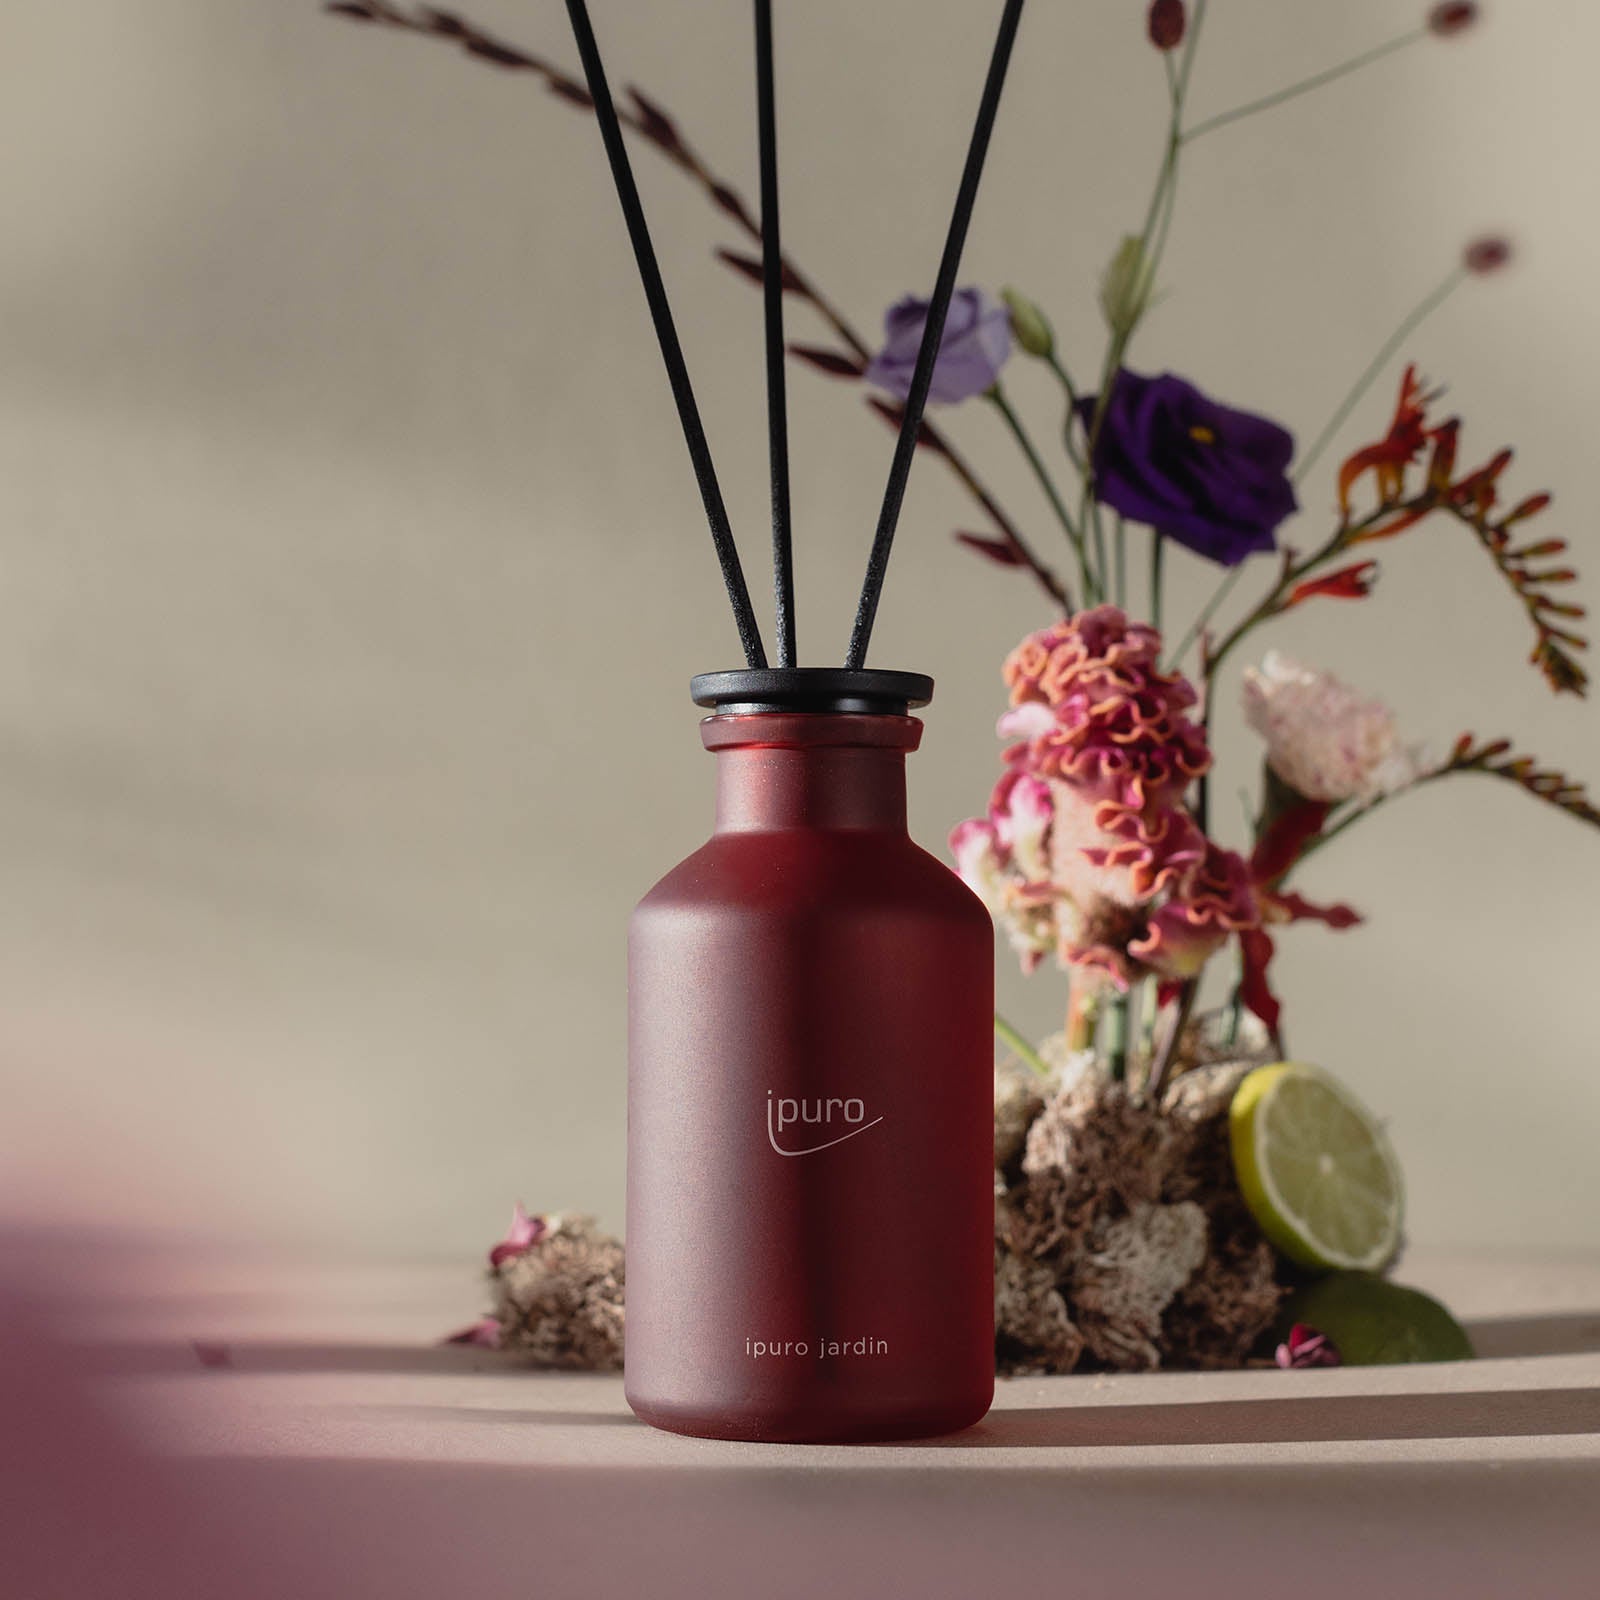 CLASSIC ipuro jardin room fragrance – IPURO